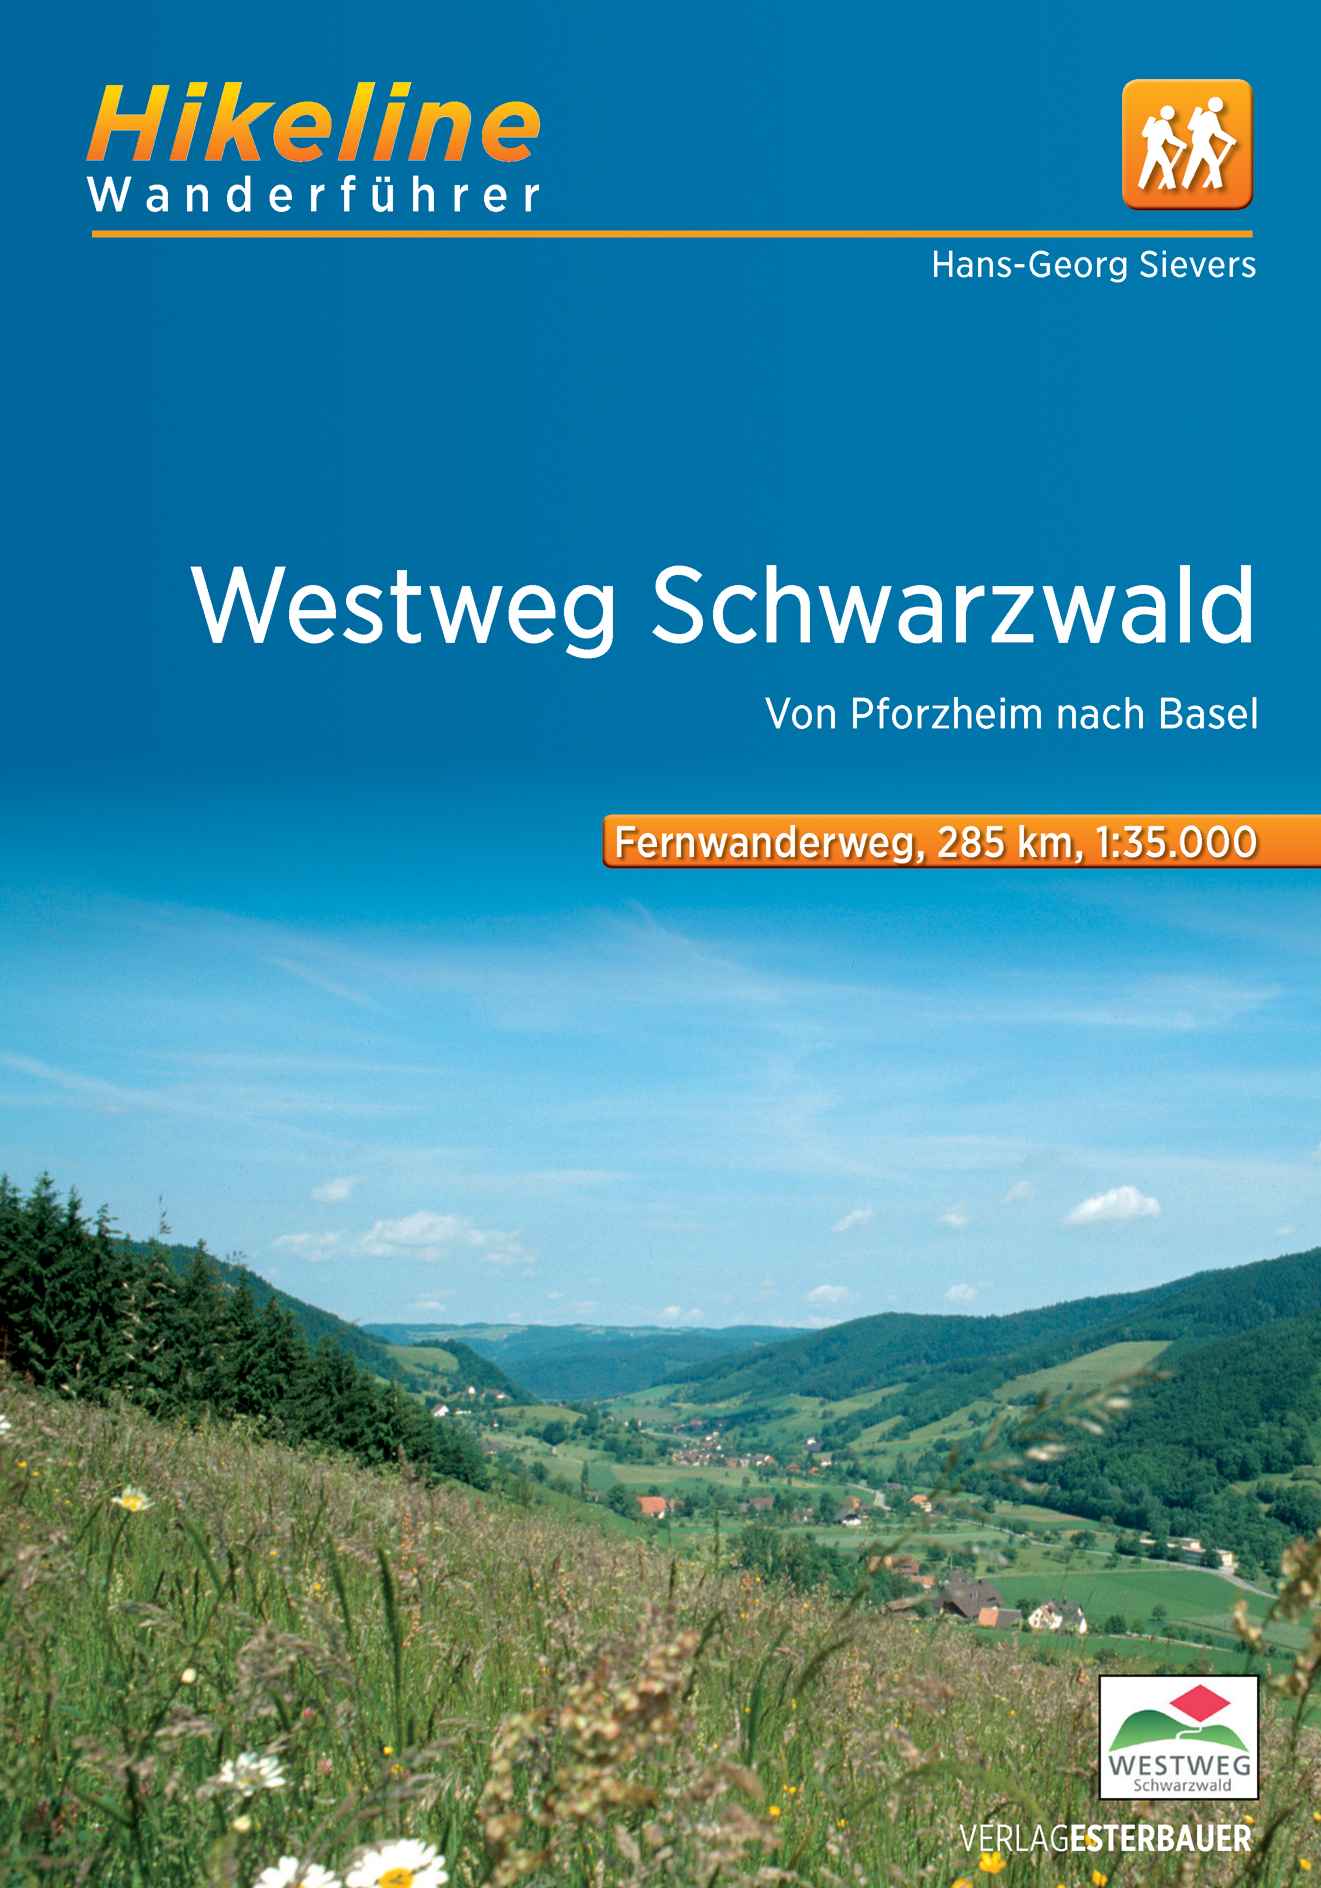 Online bestellen: Wandelgids Hikeline Westweg Schwarzwald | Esterbauer